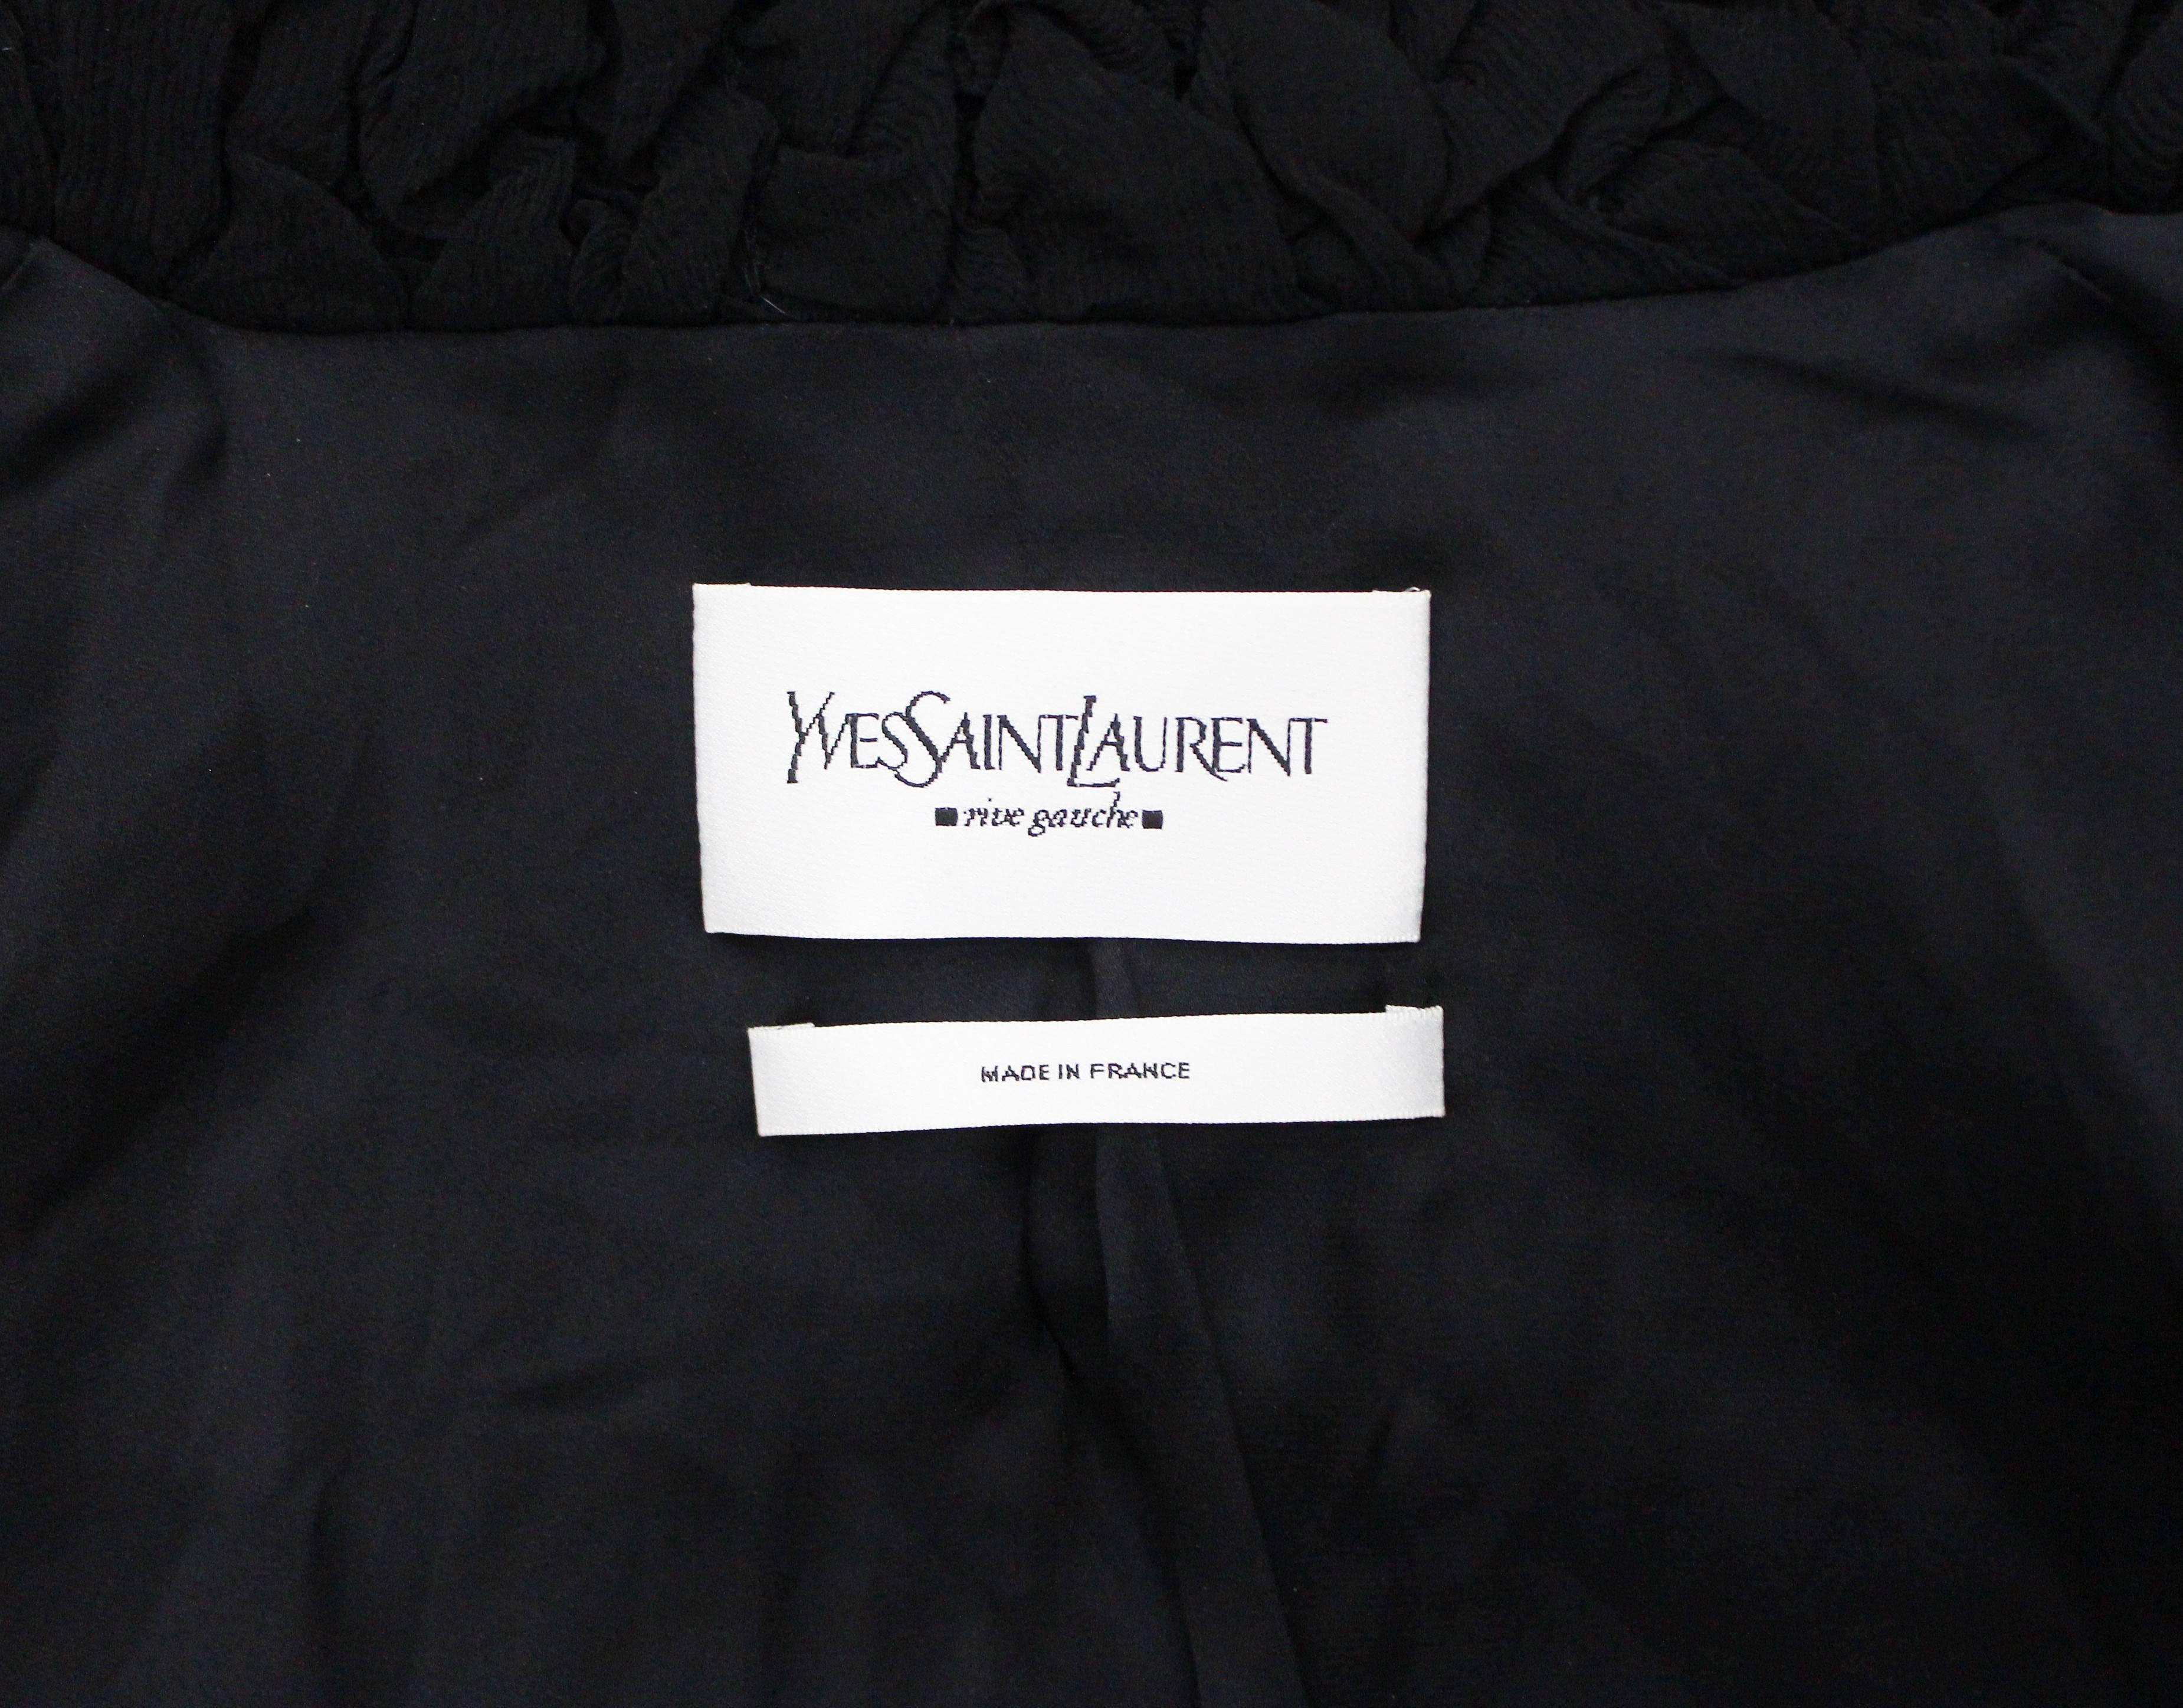 Tom Ford for Yves Saint Laurent silk chiffon evening jacket, Fall 2001 2